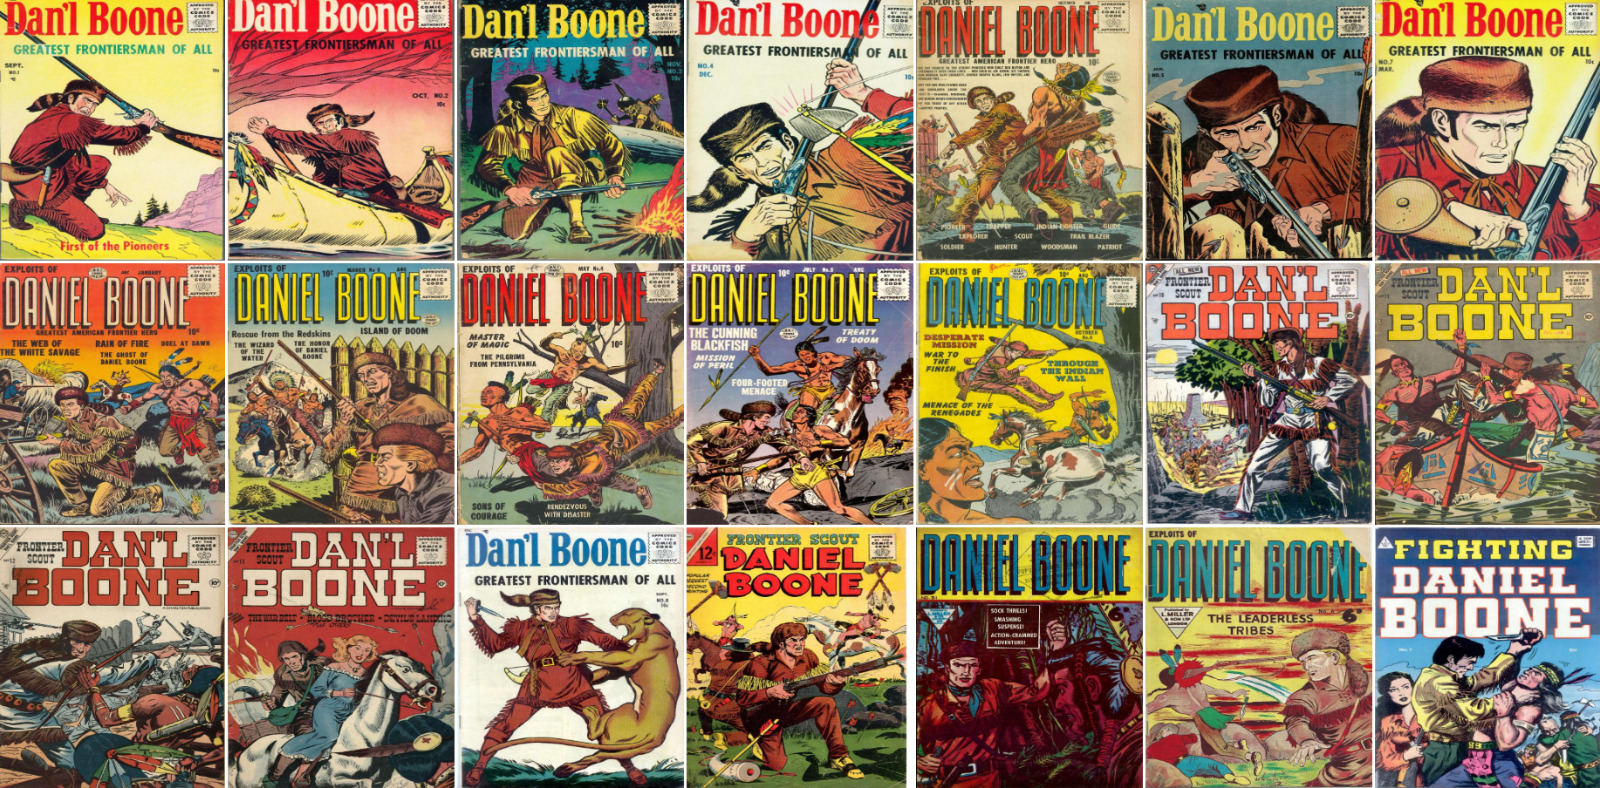 1955 - 1965 Daniel Boone and Dan\'L Boone Comic Book Package - 22 eBooks on CD